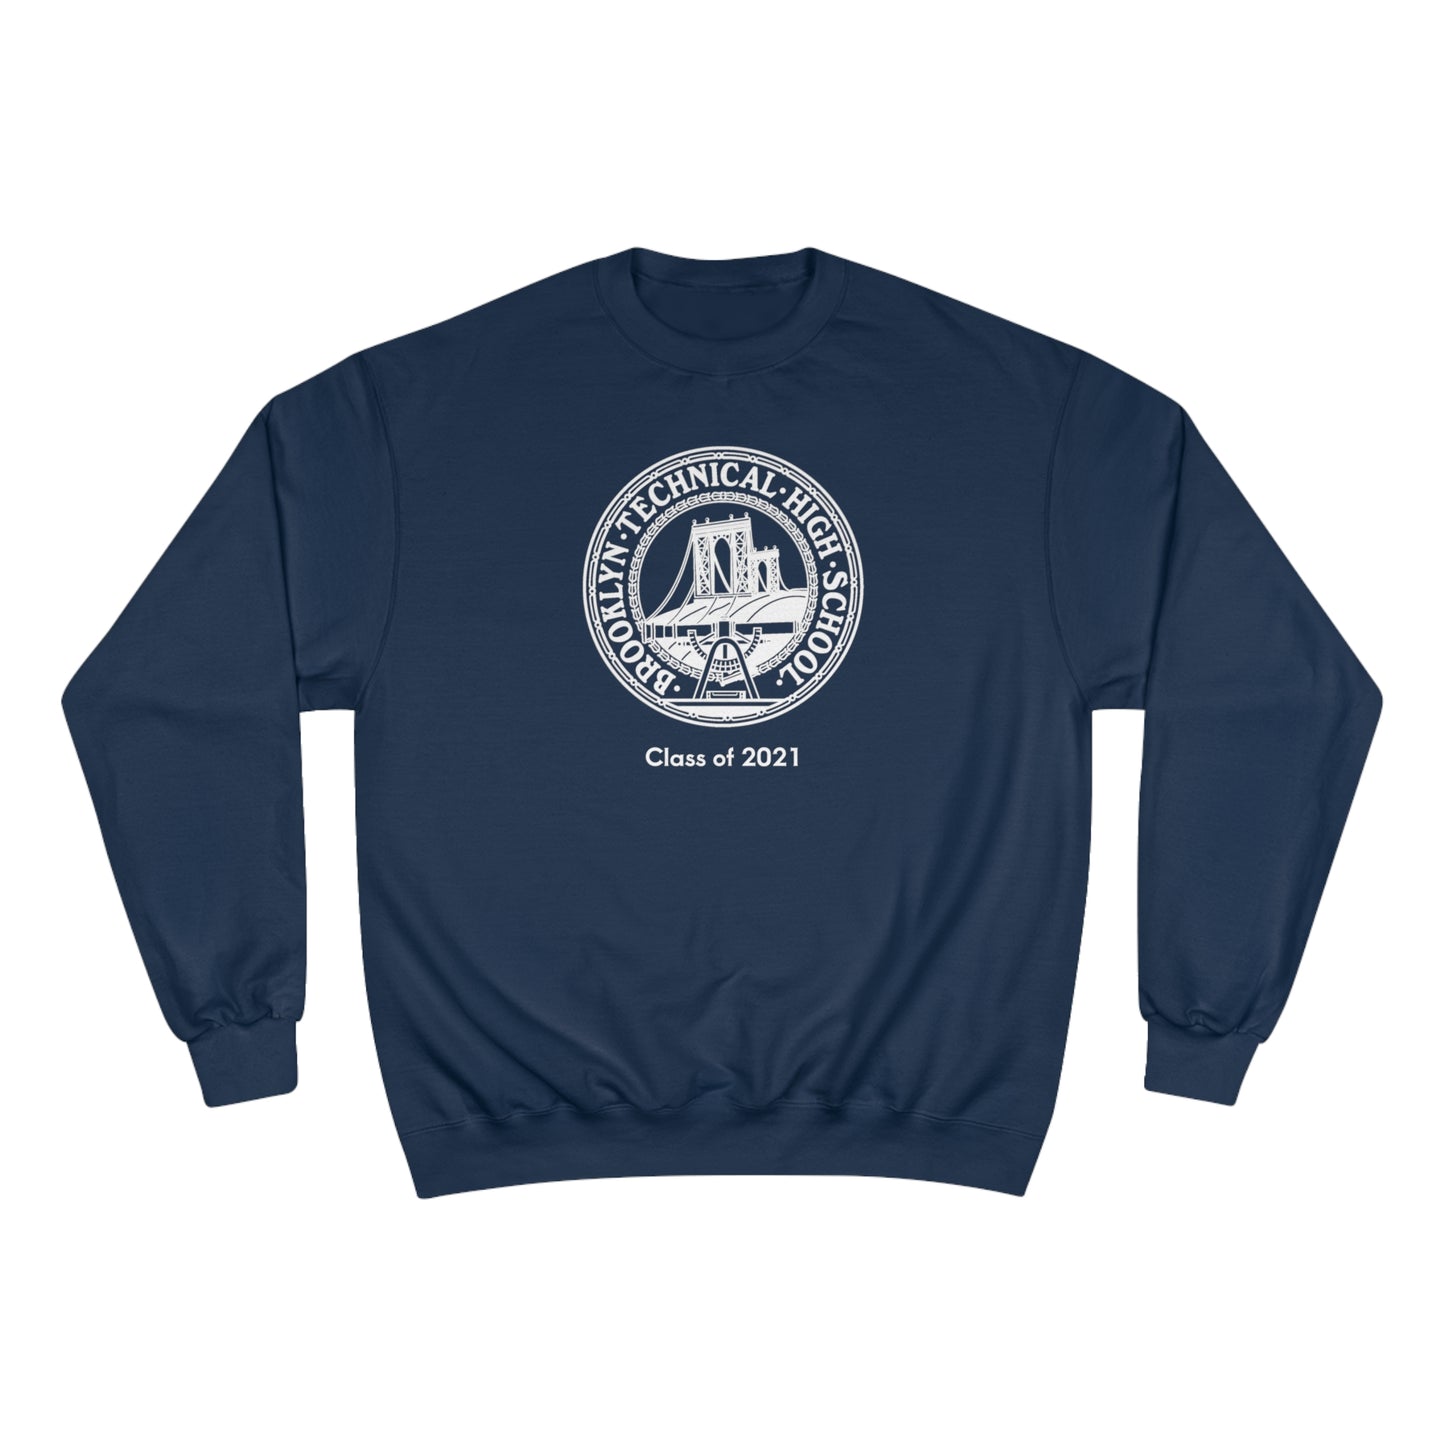 Classic Tech Seal - Champion Crewneck Sweatshirt - Class Of 2021